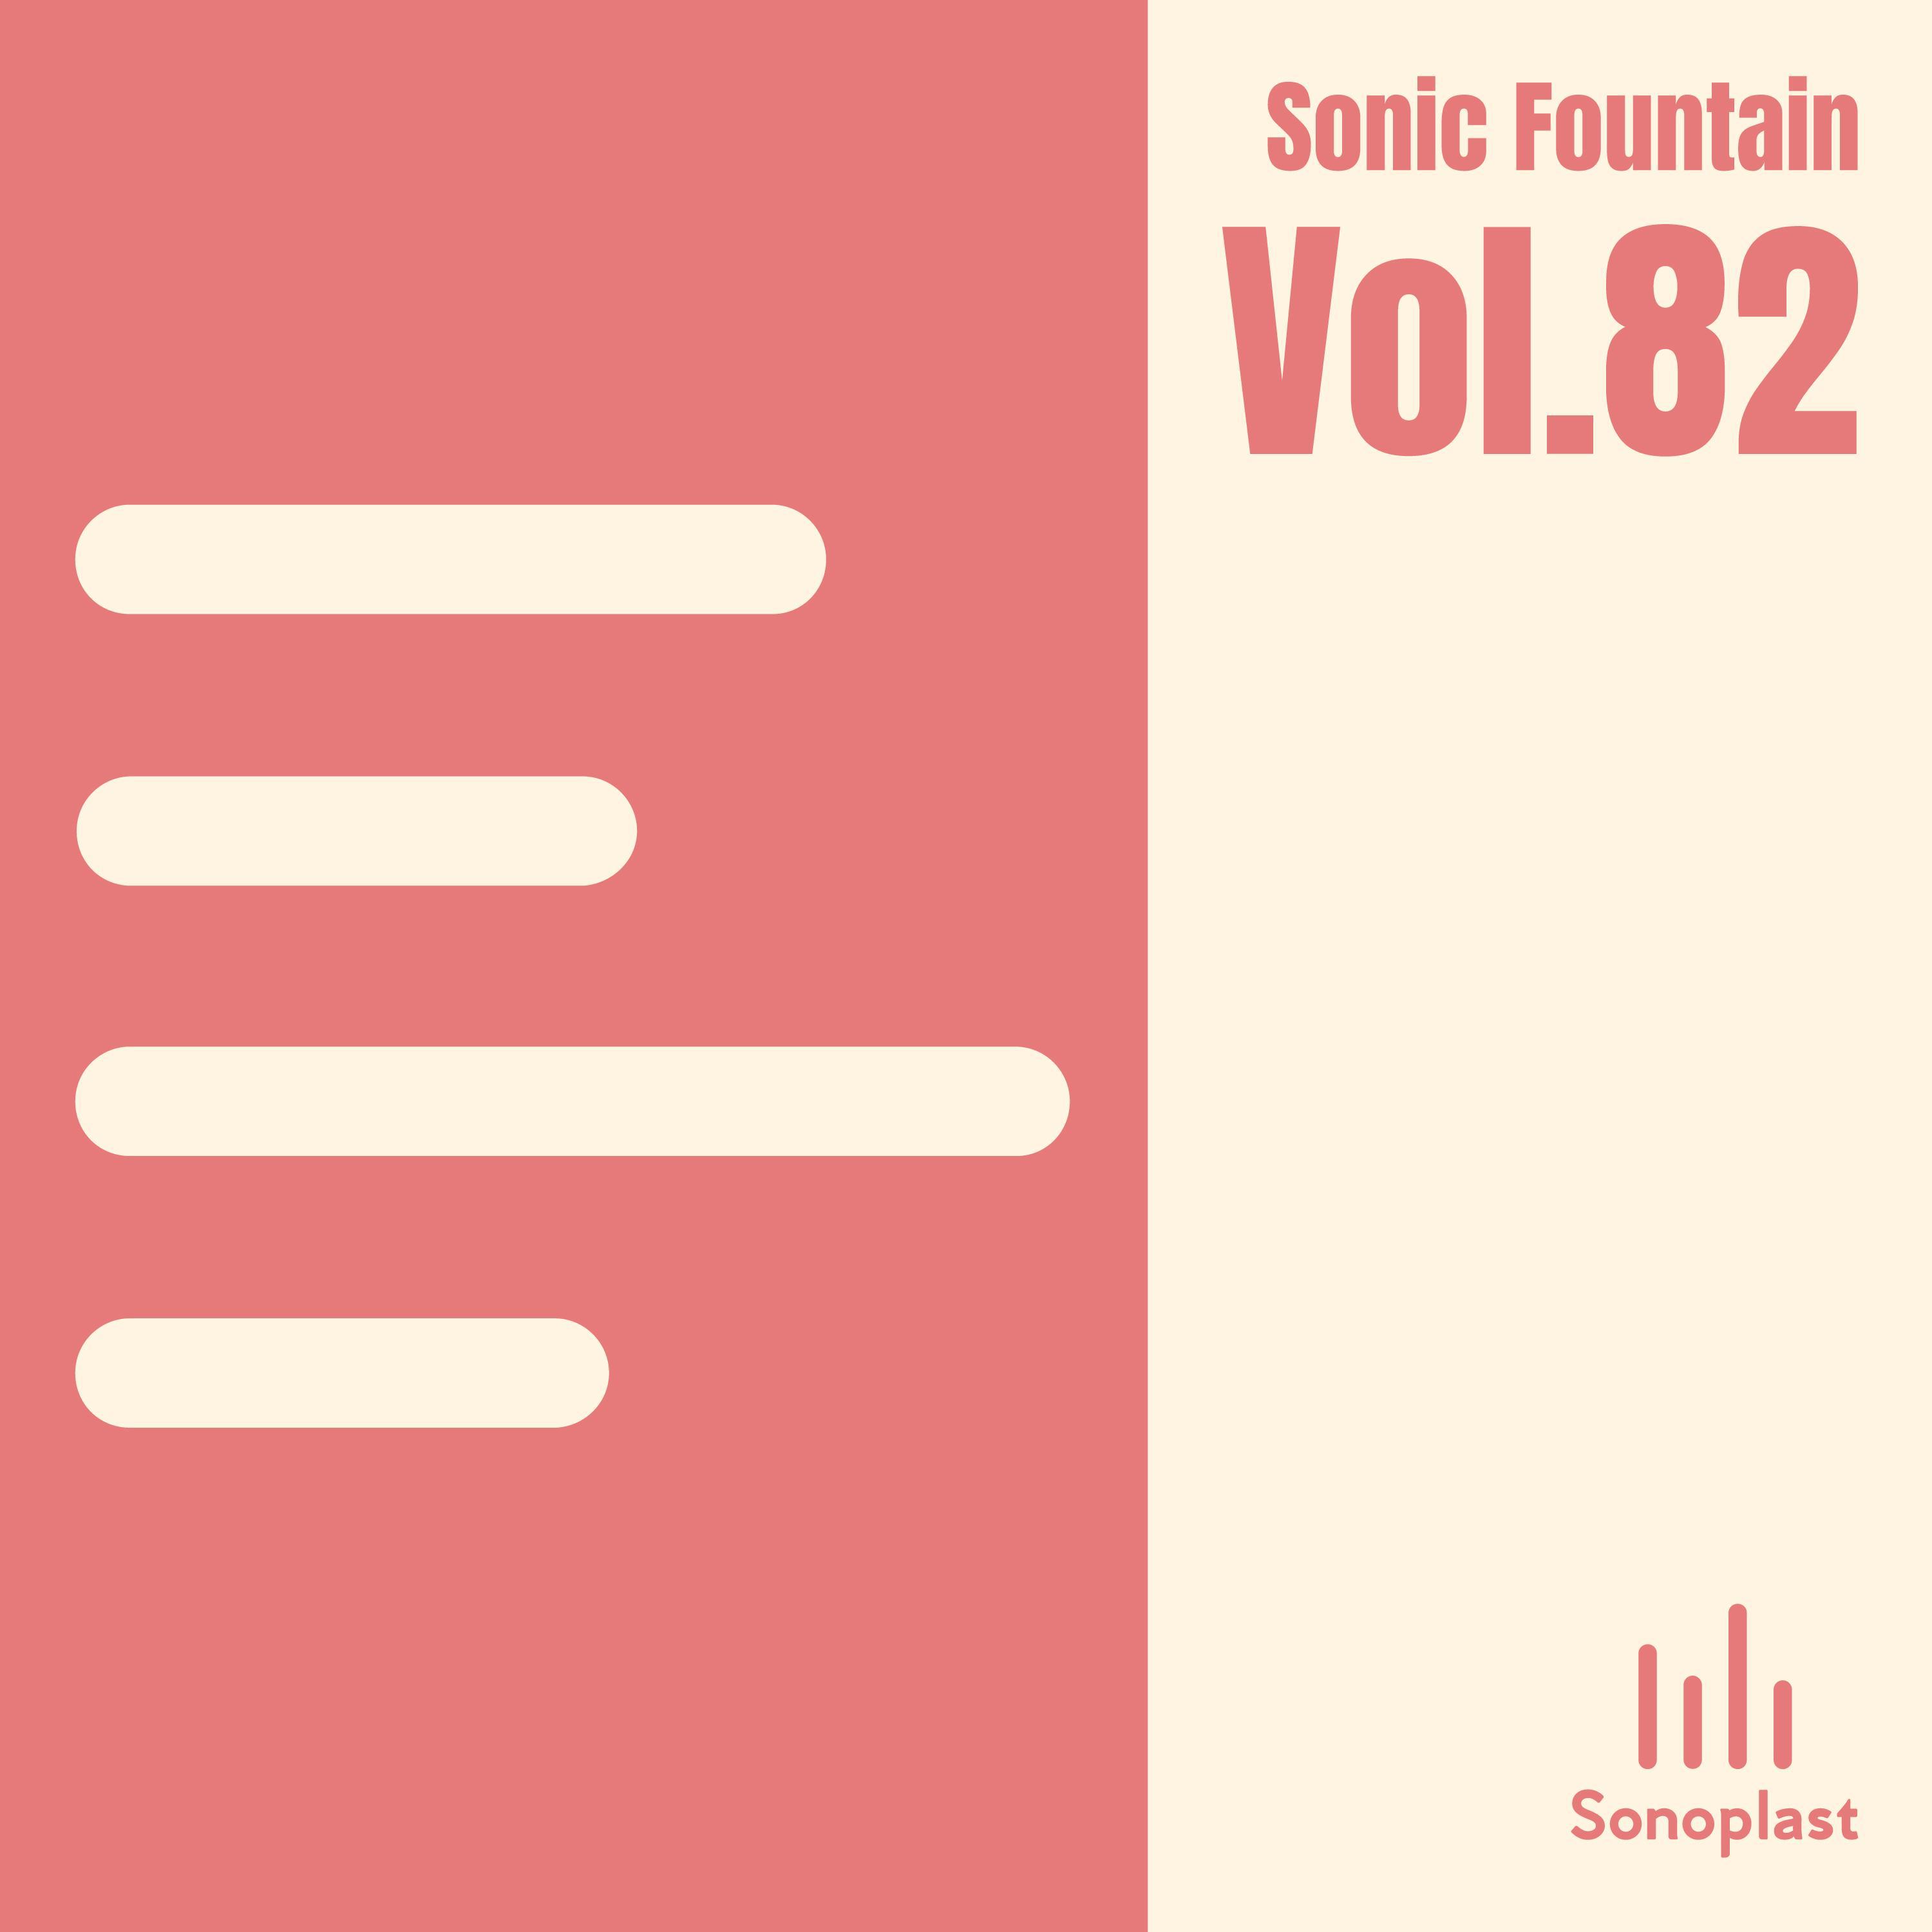 Baby, Don't Ever Change歌词 歌手Sonoplast-专辑Sonic Fountain, Vol. 82-单曲《Baby, Don't Ever Change》LRC歌词下载